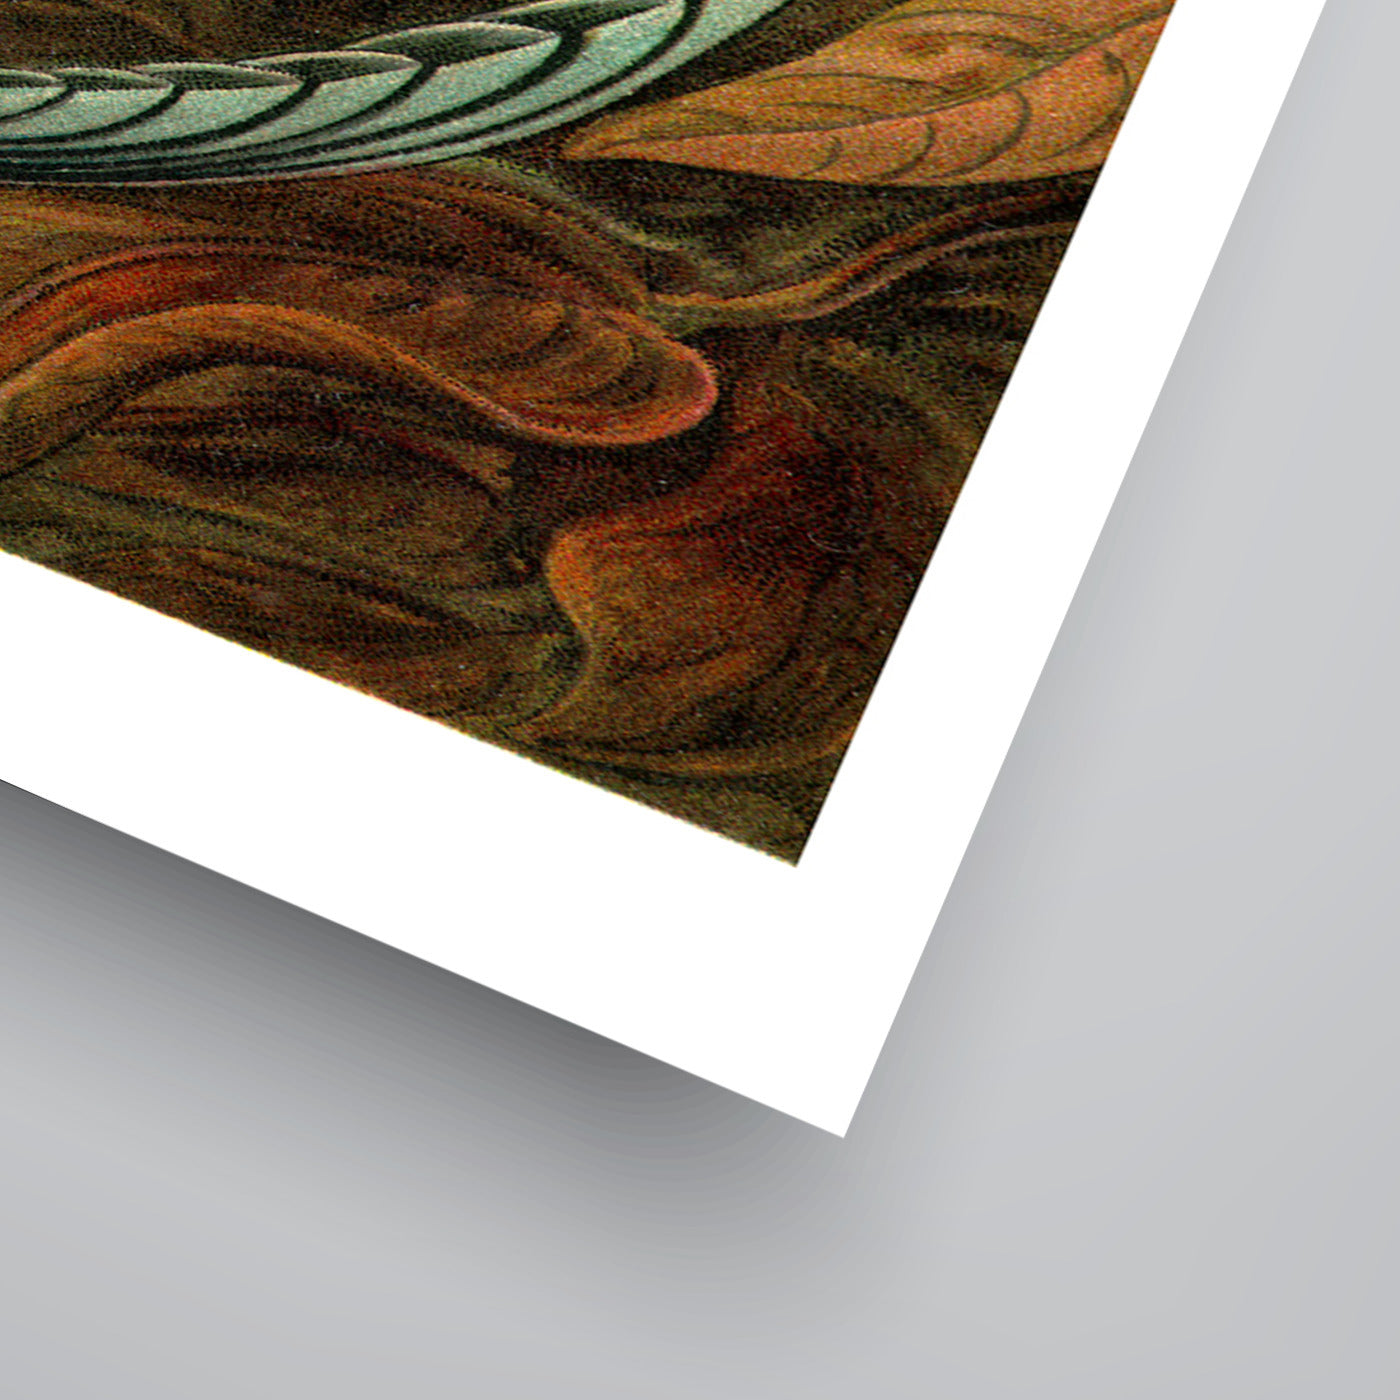 Haeckel Plate 99 by Coastal Print & Design Art Print - Art Print - Americanflat